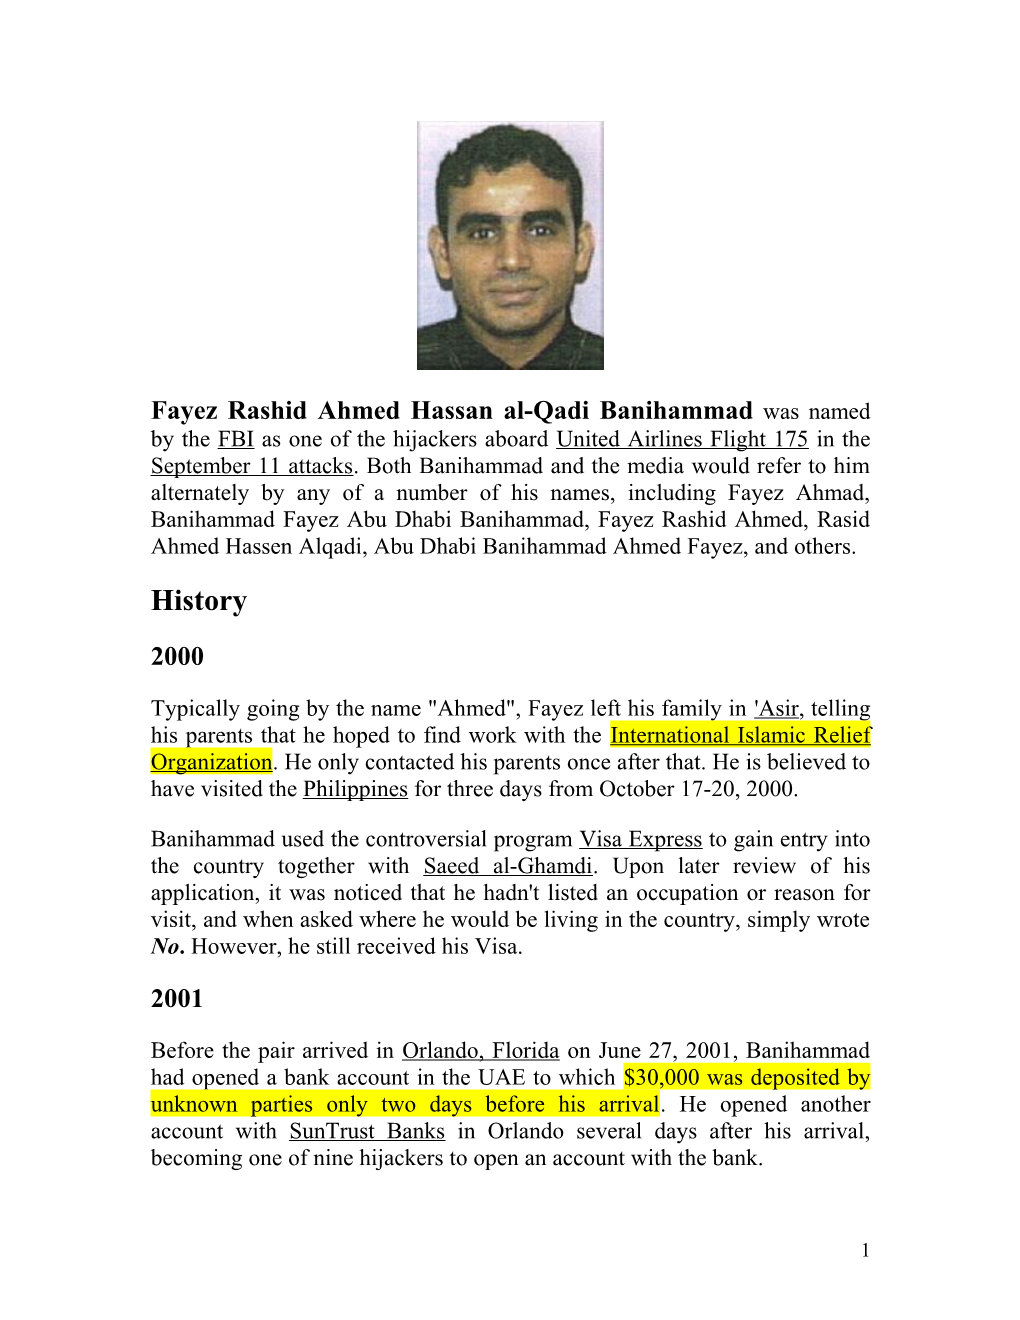 Fayez Rashid Ahmed Hassan Al-Qadi Banihammad Was Named by the FBI As One of the Hijackers